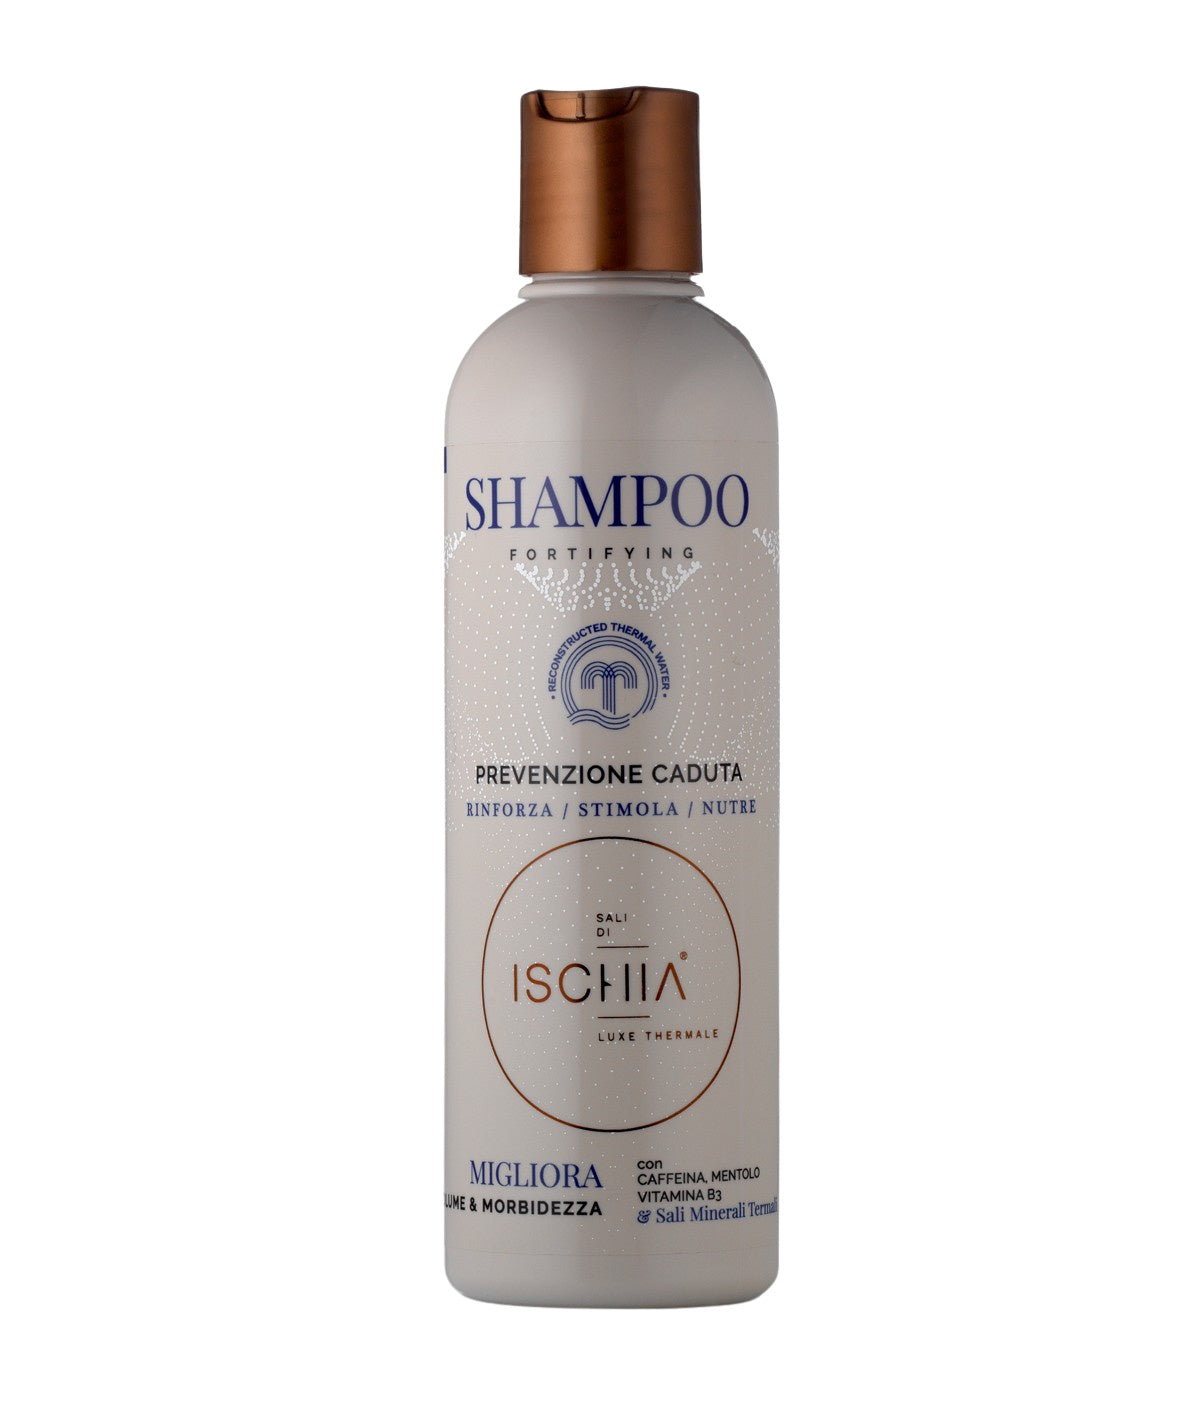 Sali Di Ischia Fortifying Shampoo Hair Loss Prevention 250 ml